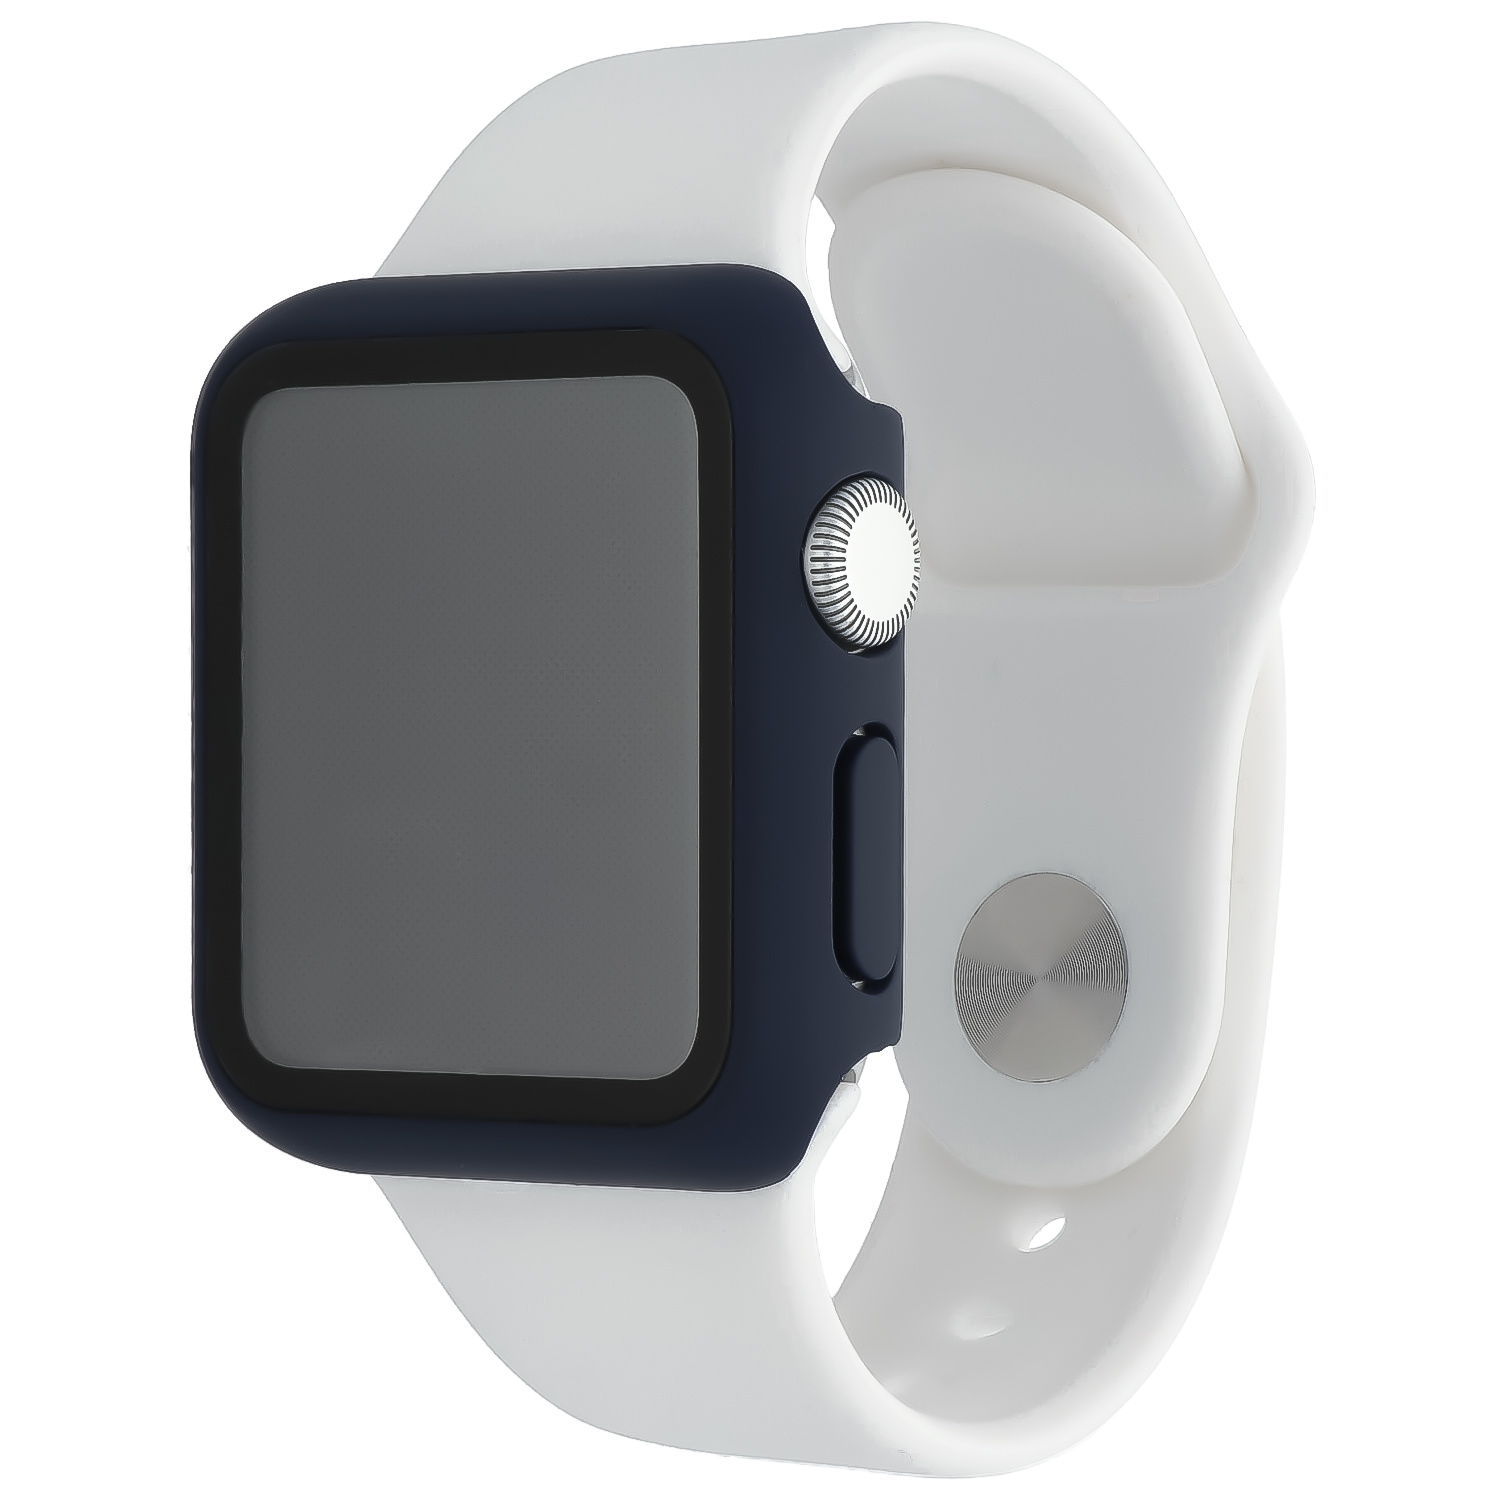 Apple Watch hard case - middernacht blauw